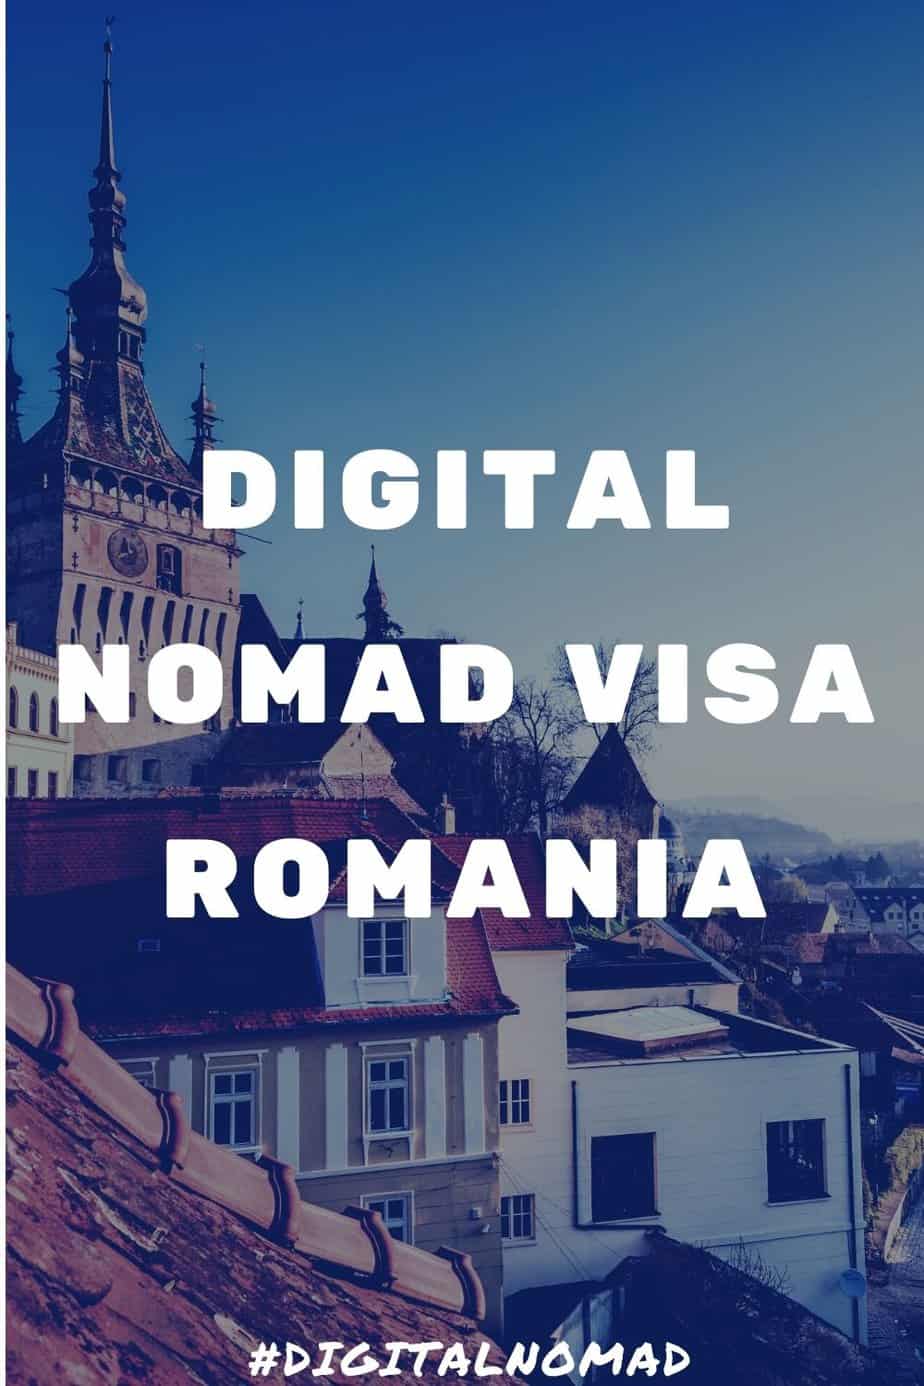 Romania Digital Nomad Visa: The latest information